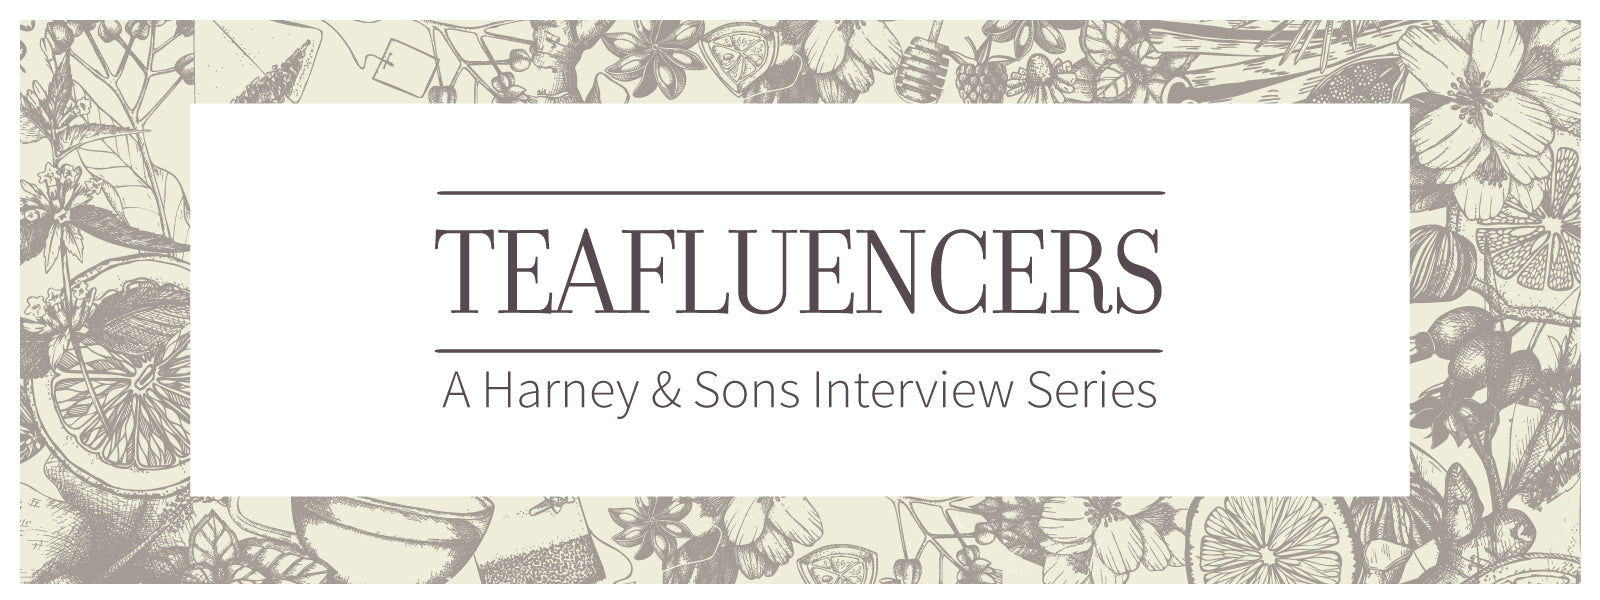 Harney & Sons Teafluencer, Buyer Elvira Cardenas